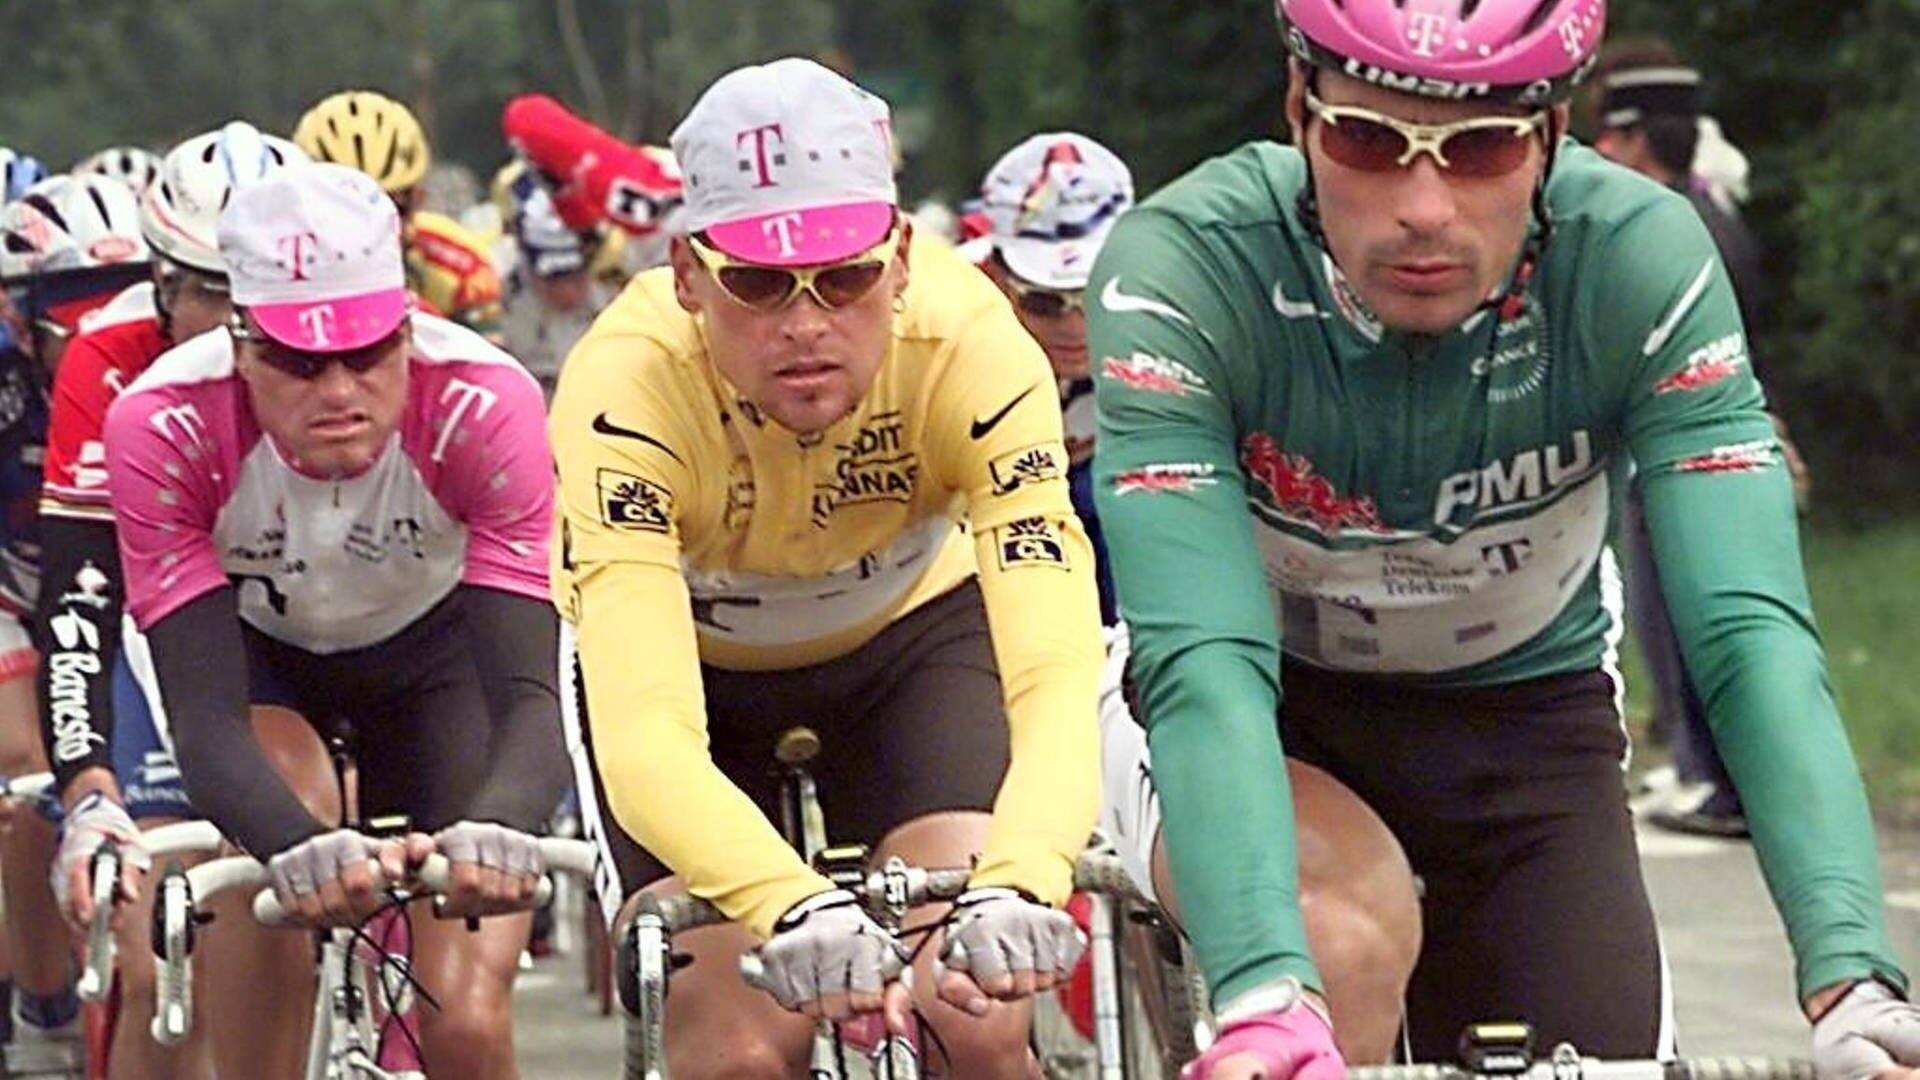 Jan Ullrich im gelben Trikot der Tour de France. Vor ijm Erik Zabel im grünen Trikot.